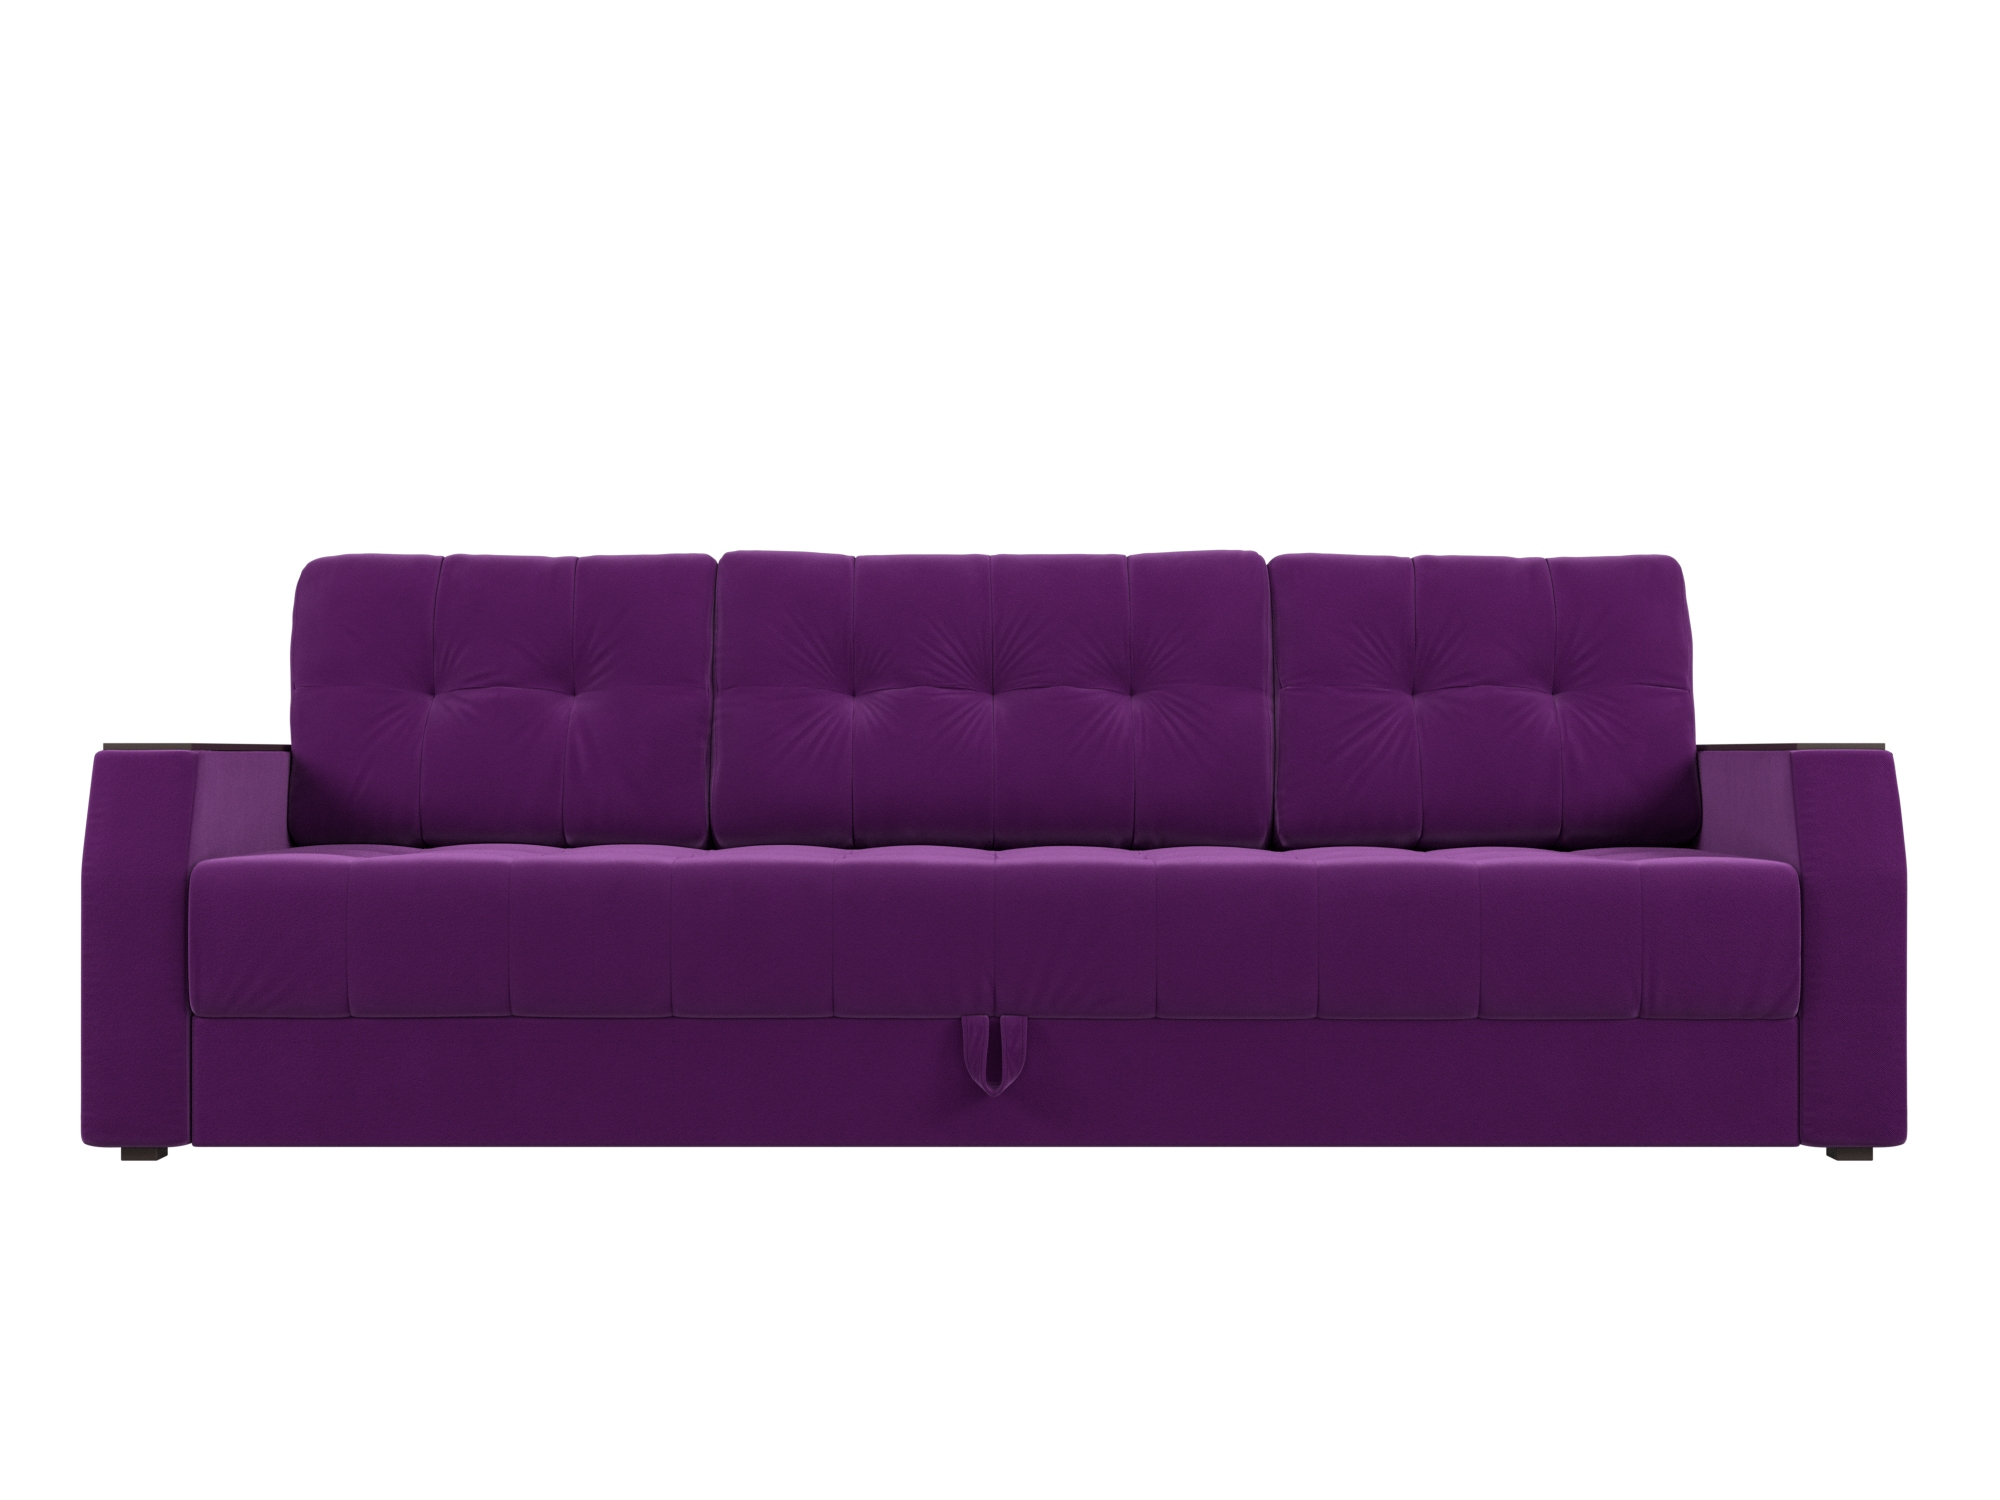 Диван-еврокнижка Атлант БС MebelVia , Фиолетовый, Микровельвет, ЛДСП диван еврокнижка мебелико атлант т микровельвет фиолетовый